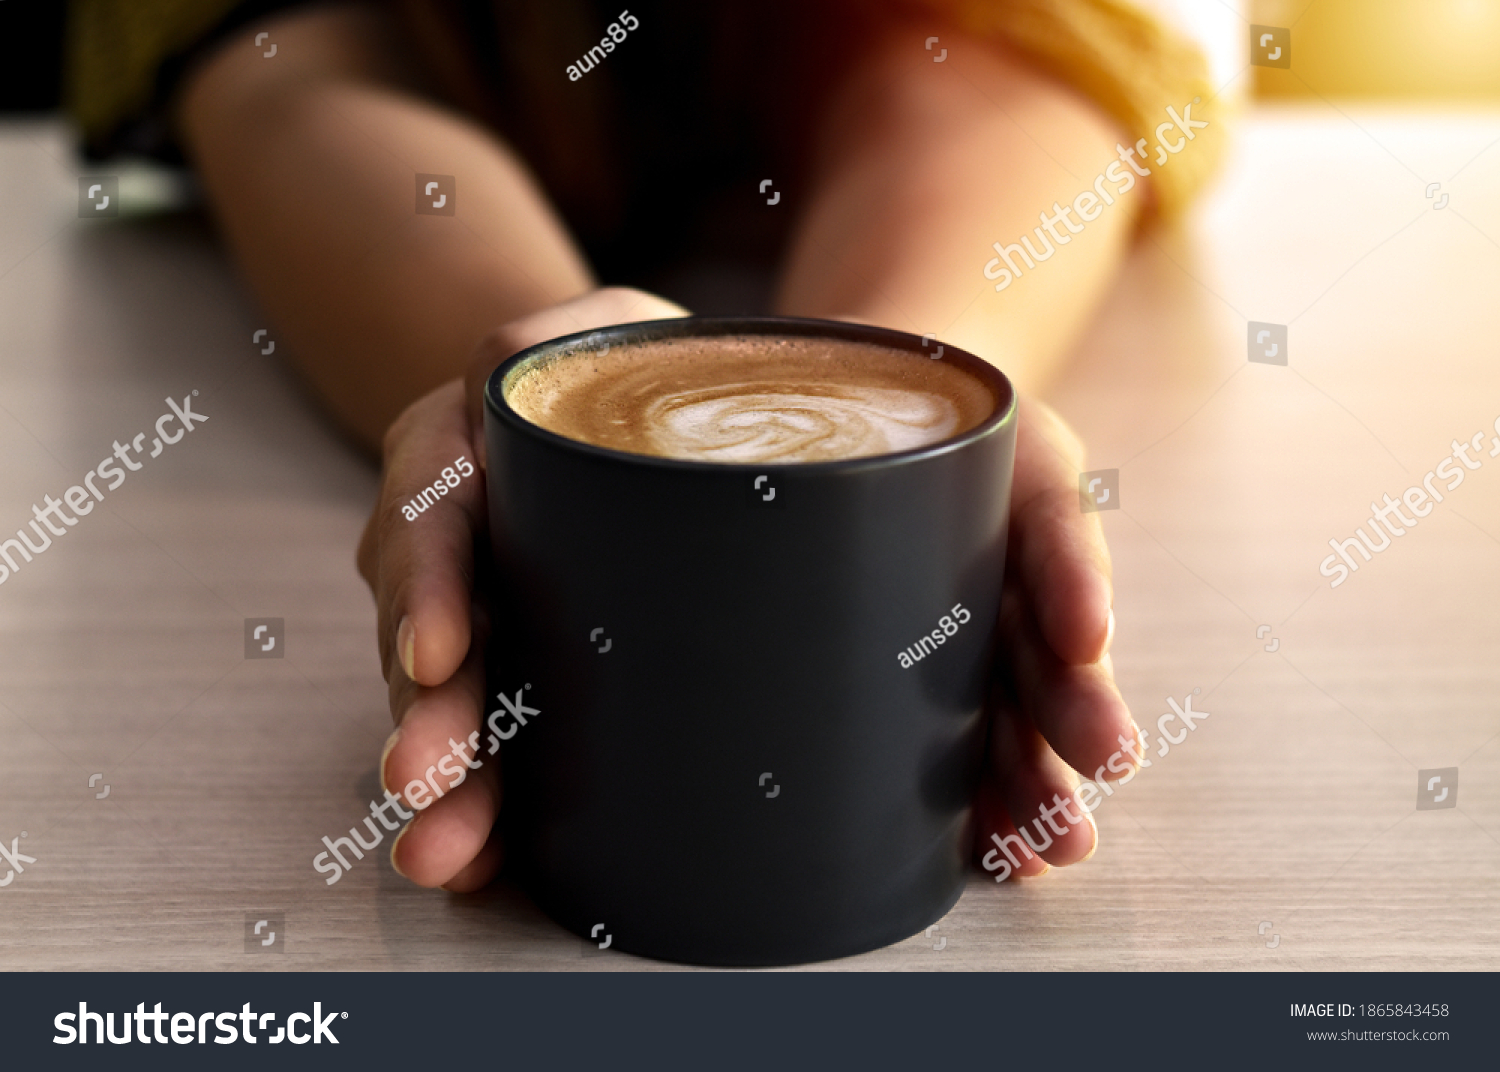 Warm coffee in a black mug with woman hand. #1865843458